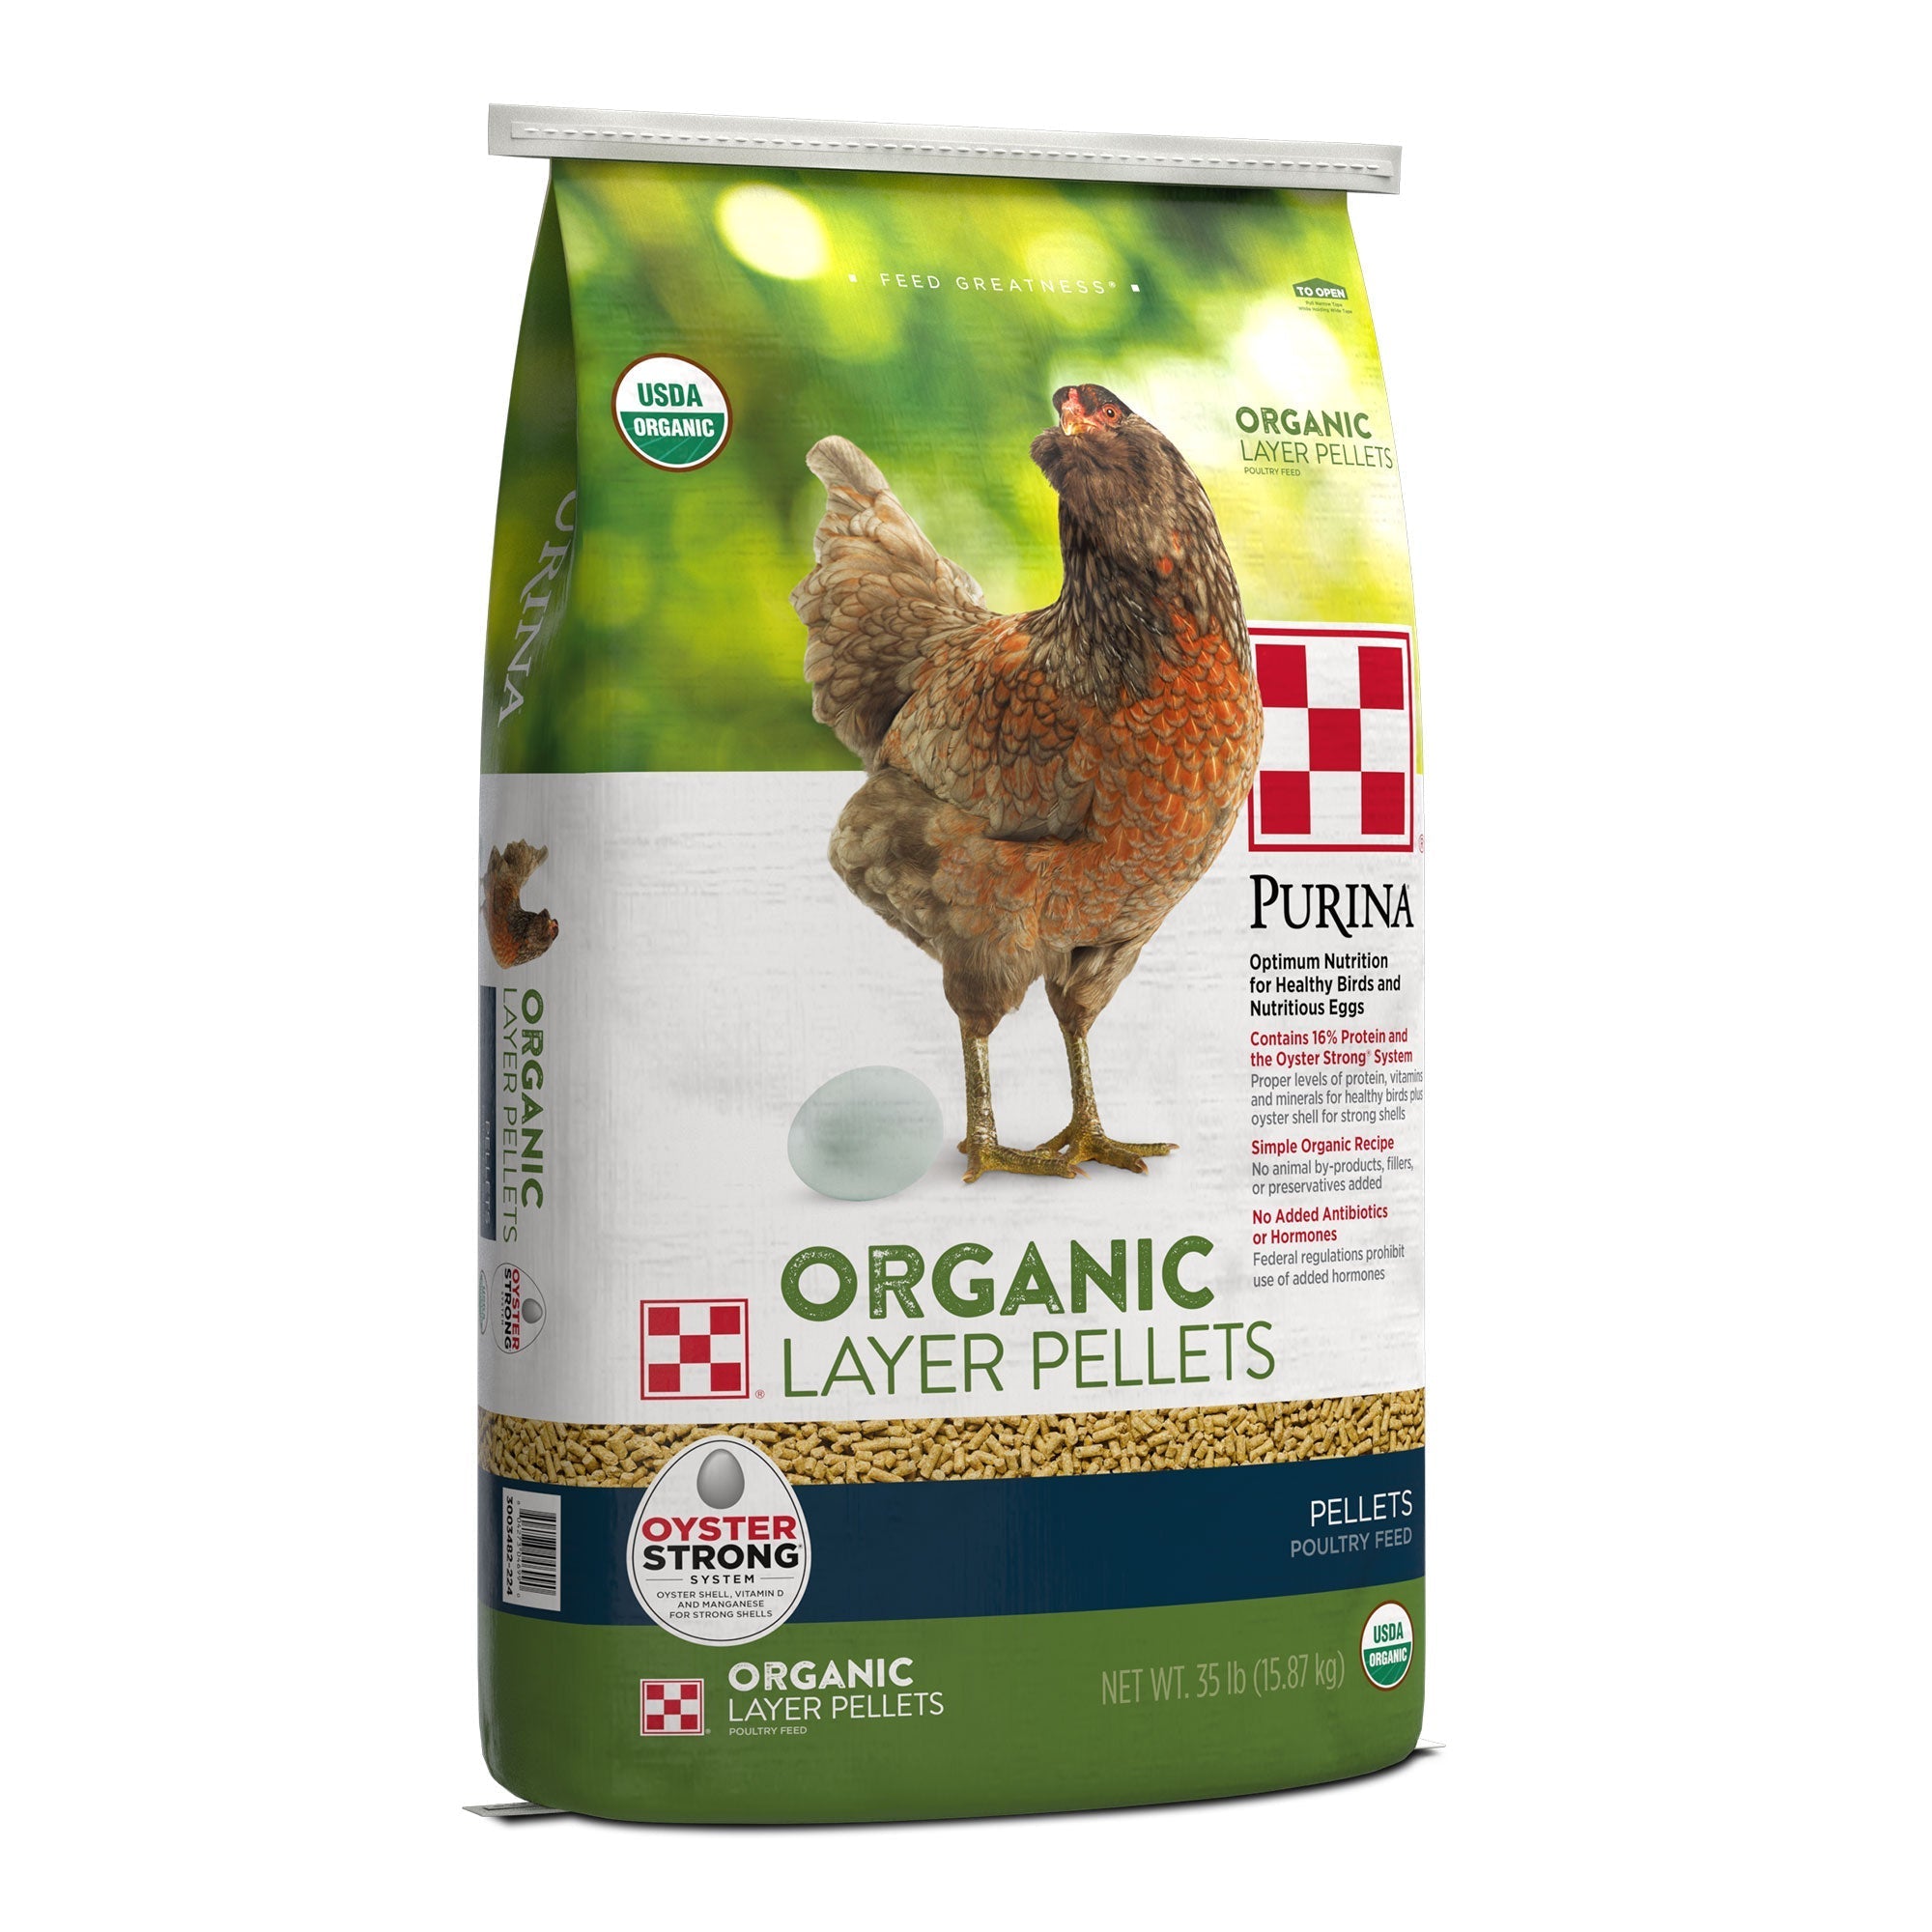 Purina® Organic Layer Pellets Chicken Feed